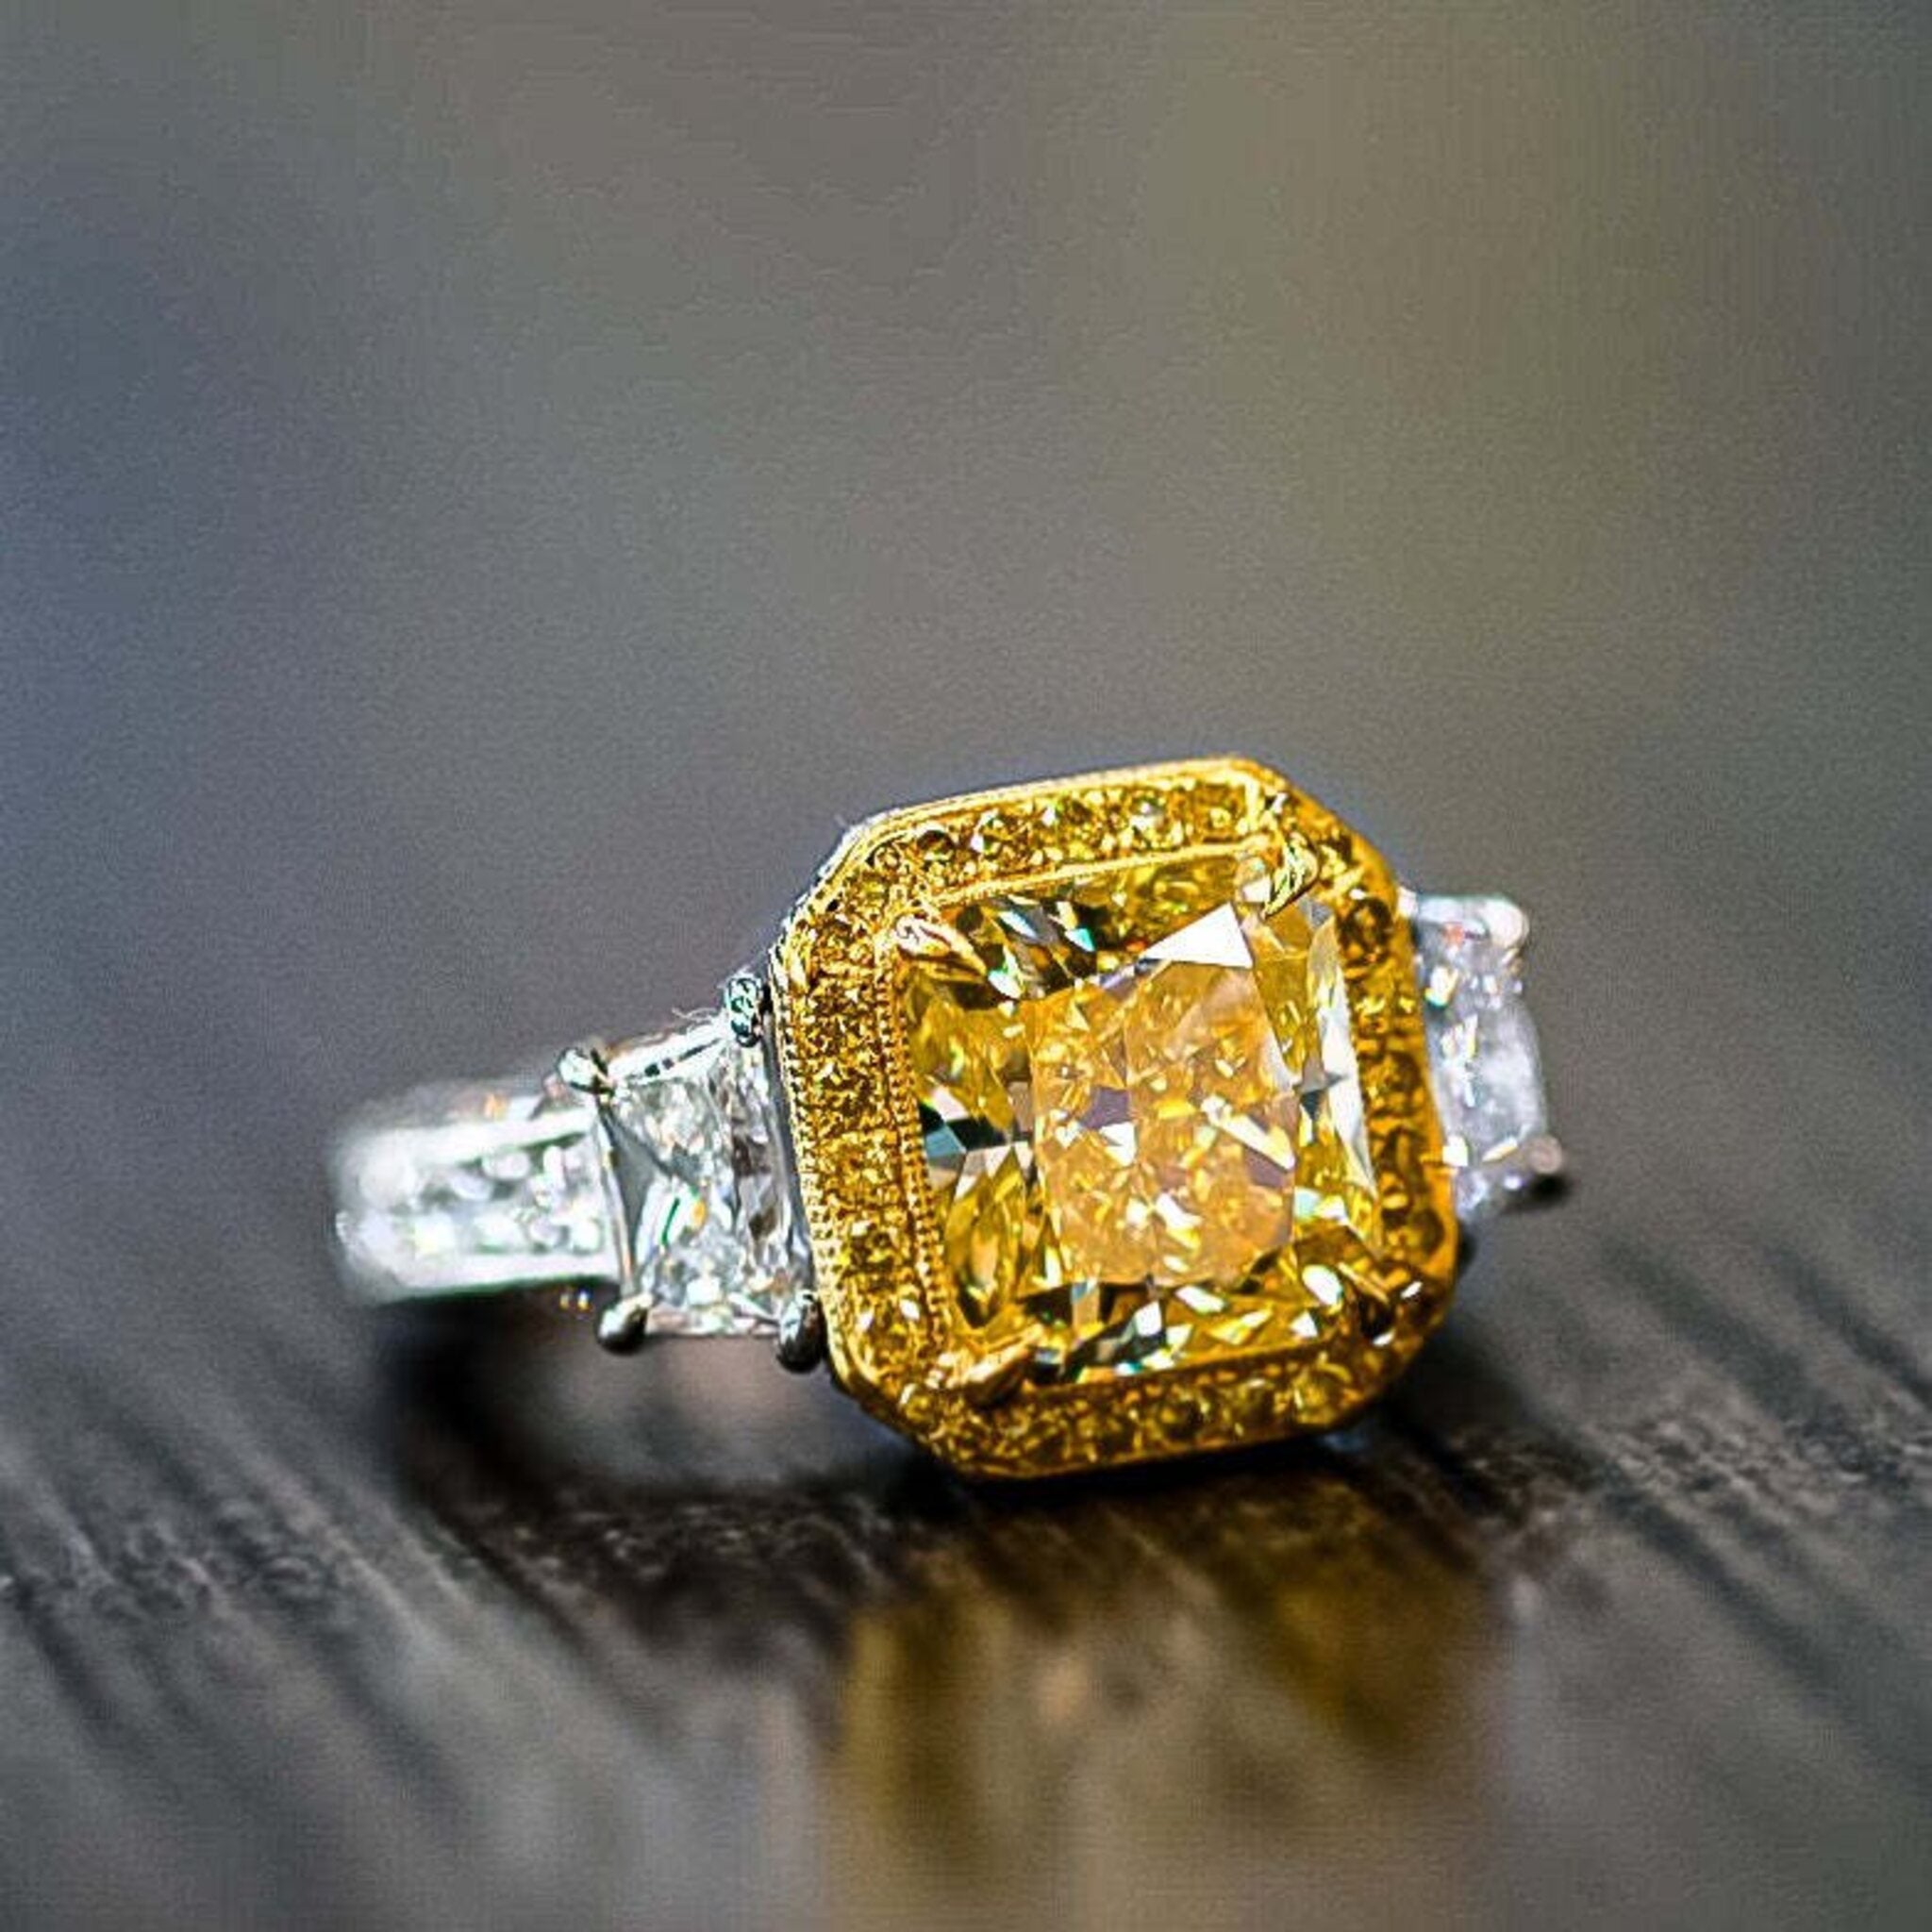 3 carat radiant cut fancy intense yellow diamond engagement ring rings a71099 9 f8f4016c b1f3 4d47 be28 c34856ff4a75